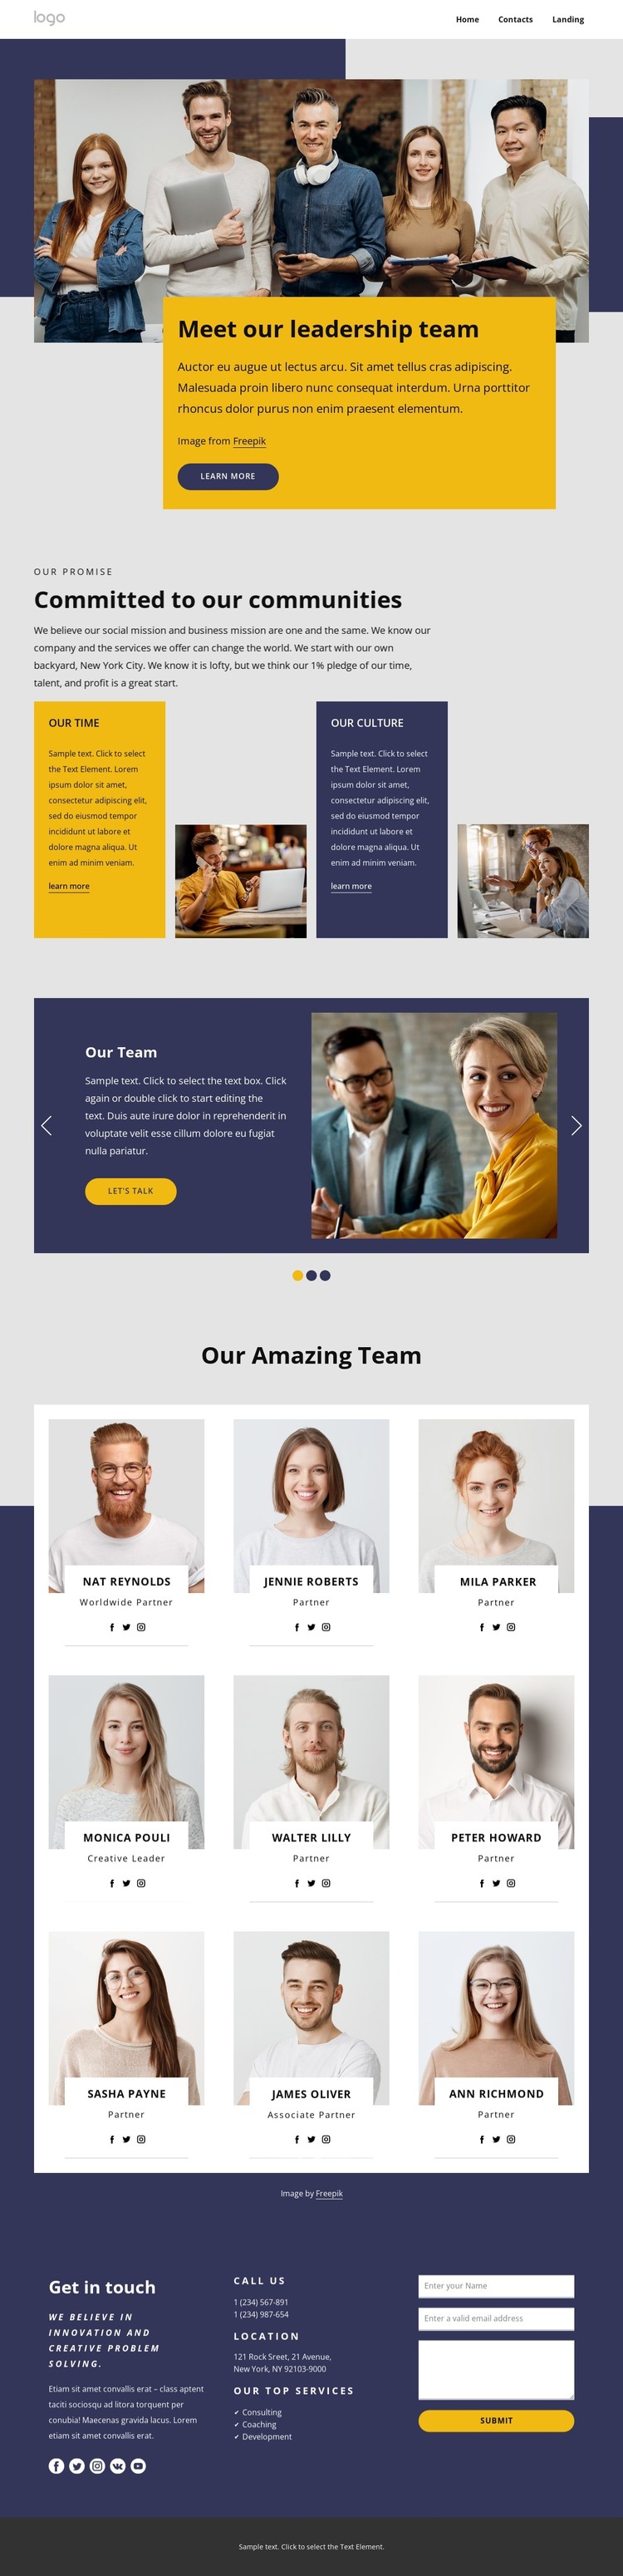 Meet our leadership team HTML Template